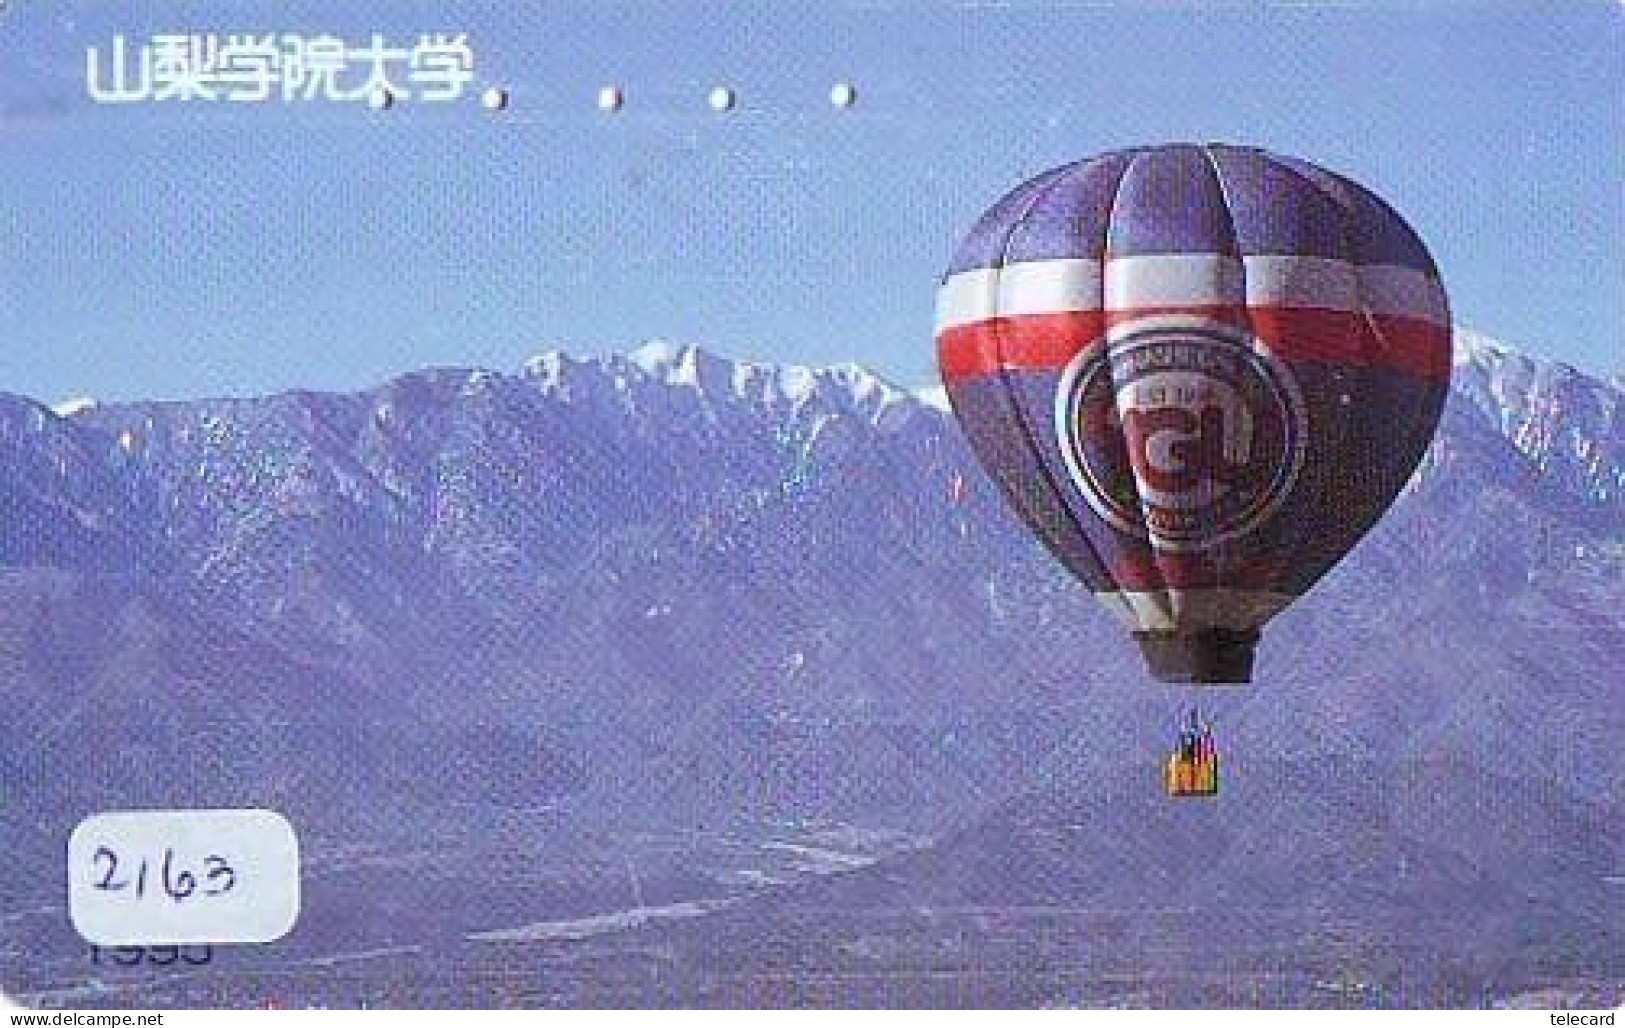 Telecarte JAPON * (2163) BALLON * MONTGOLFIERE - Hot Air Balloon * Aerostato * Heißluft PHONECARD JAPAN - - Deportes